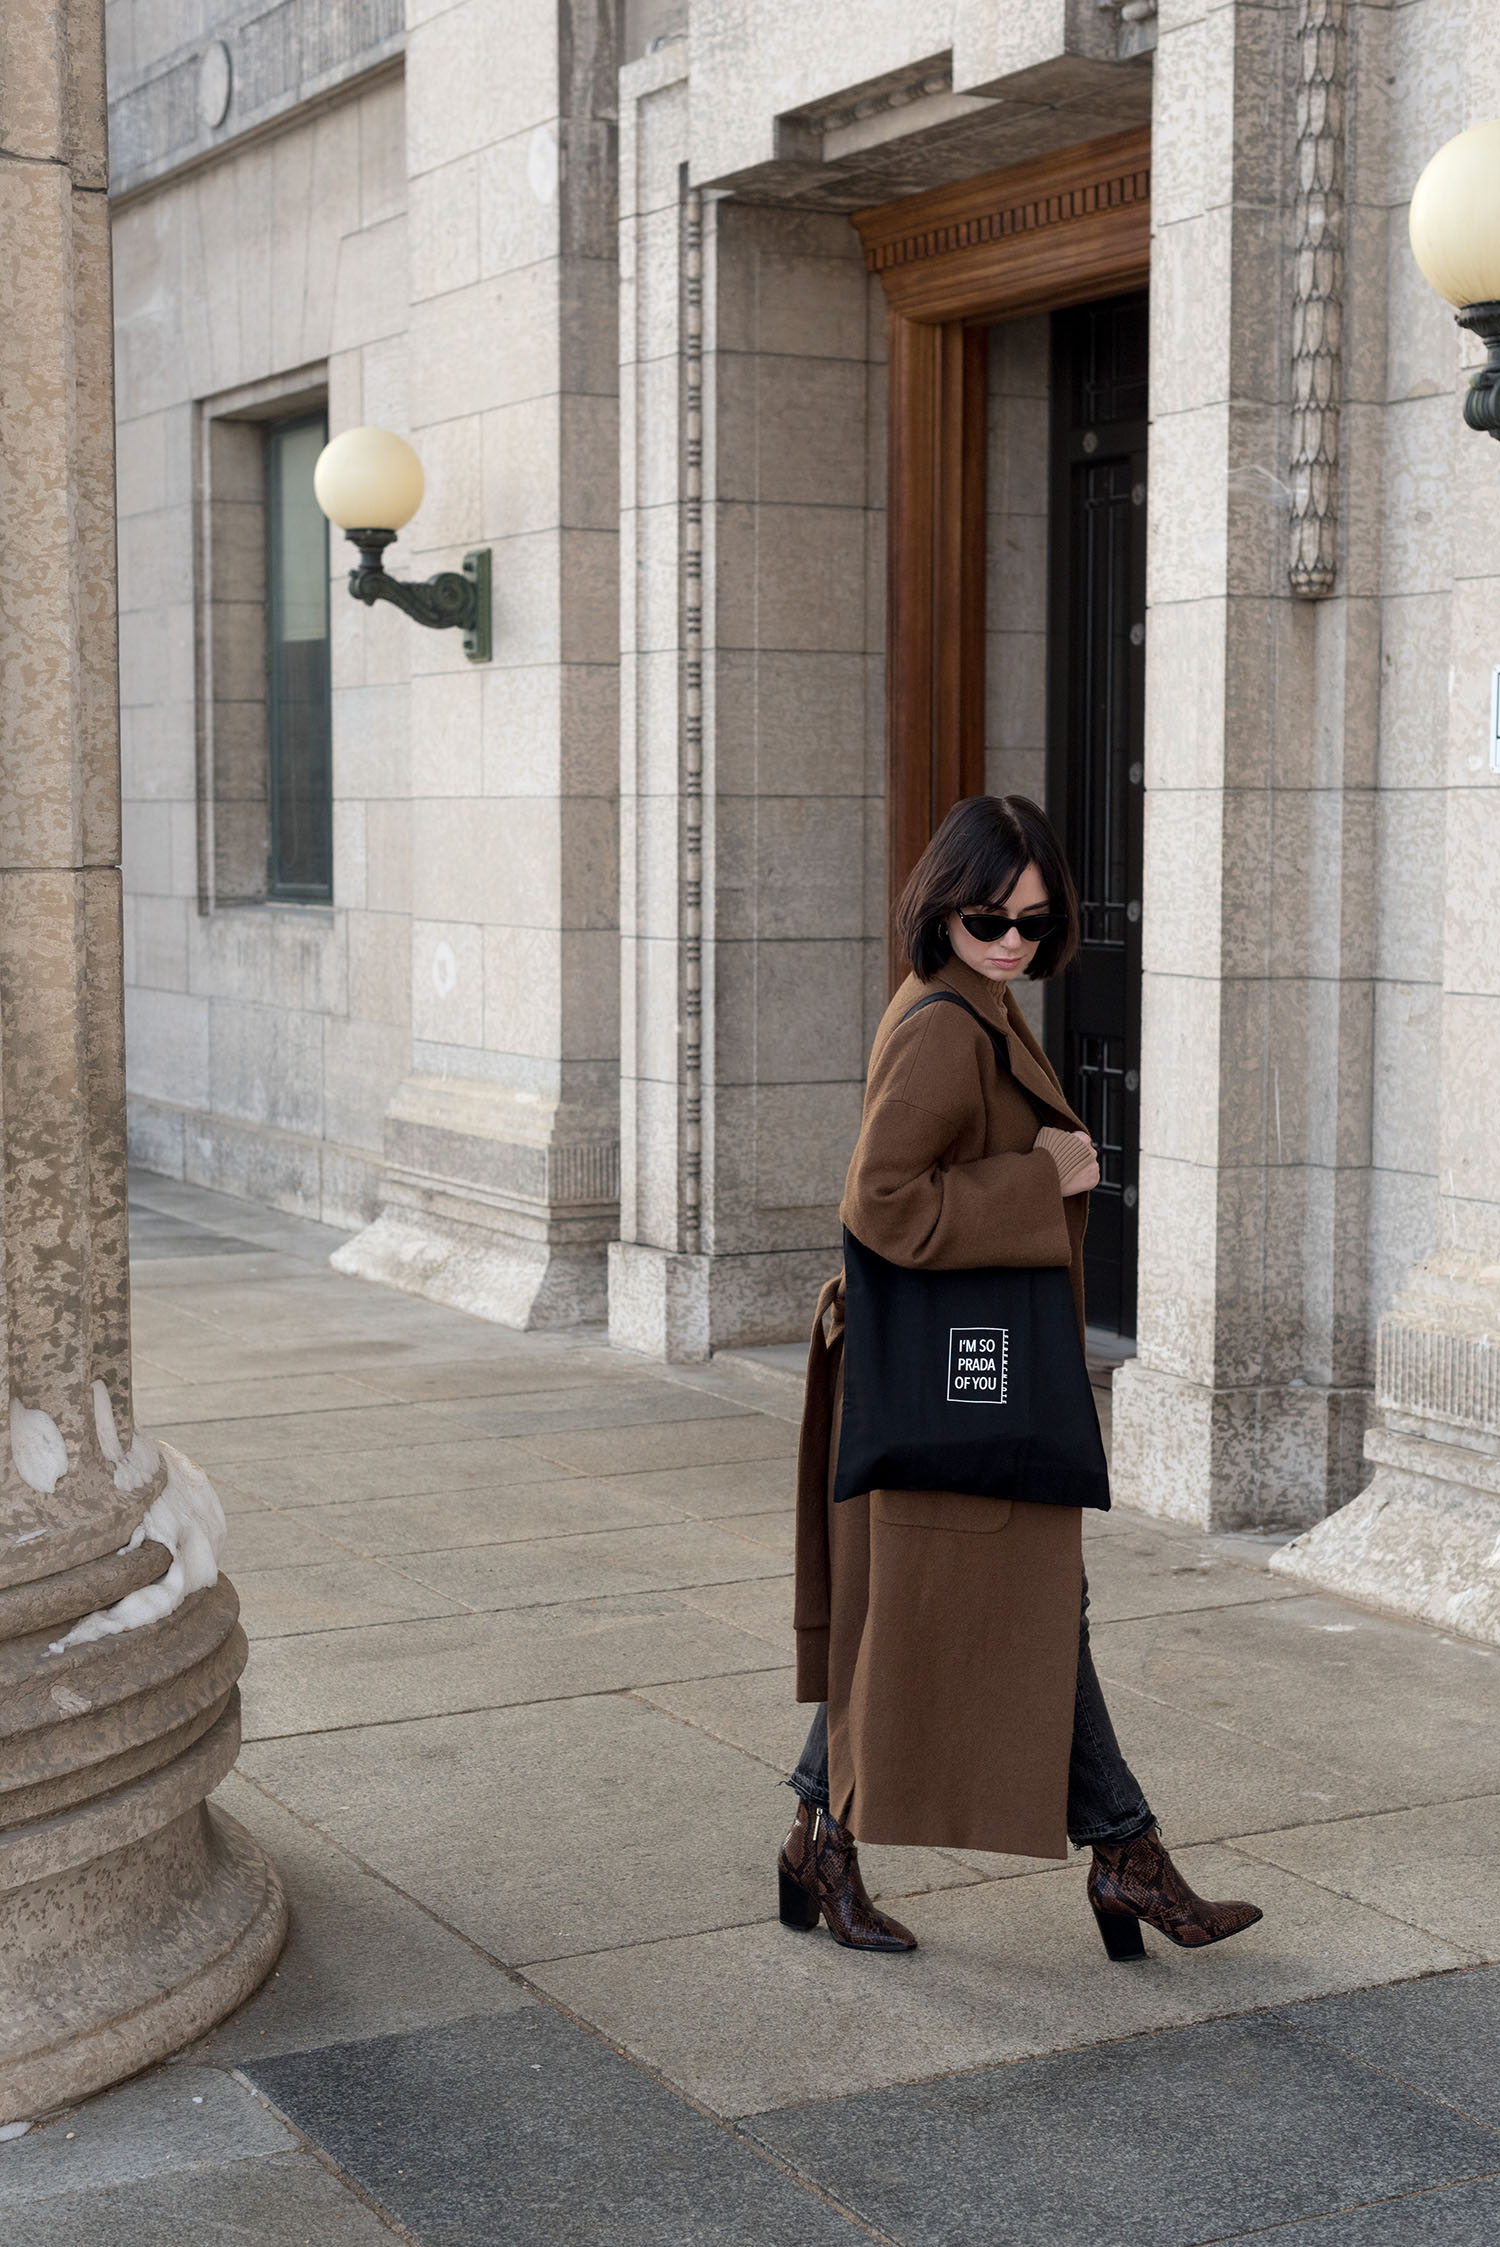 Top Winnipeg fashion blogger Cee Fardoe of Coco & Vera wears a Zara coat and carries a Le French tote bag